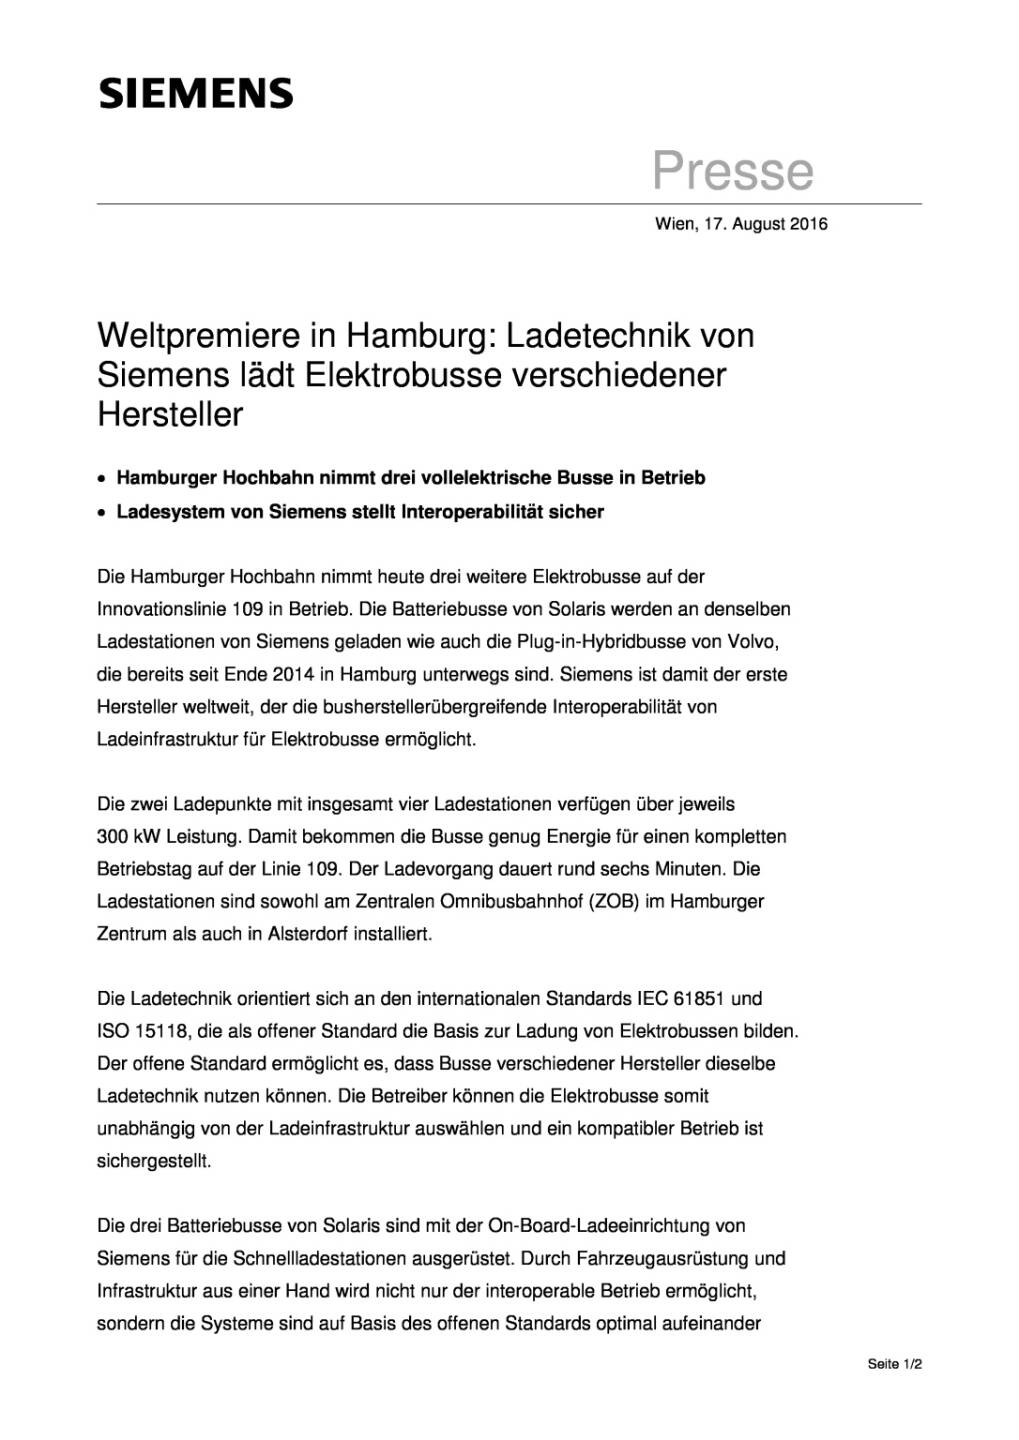 Siemens: Ladetechnik Elektrobusse, Seite 1/2, komplettes Dokument unter http://boerse-social.com/static/uploads/file_1628_siemens_ladetechnik_elektrobusse.pdf